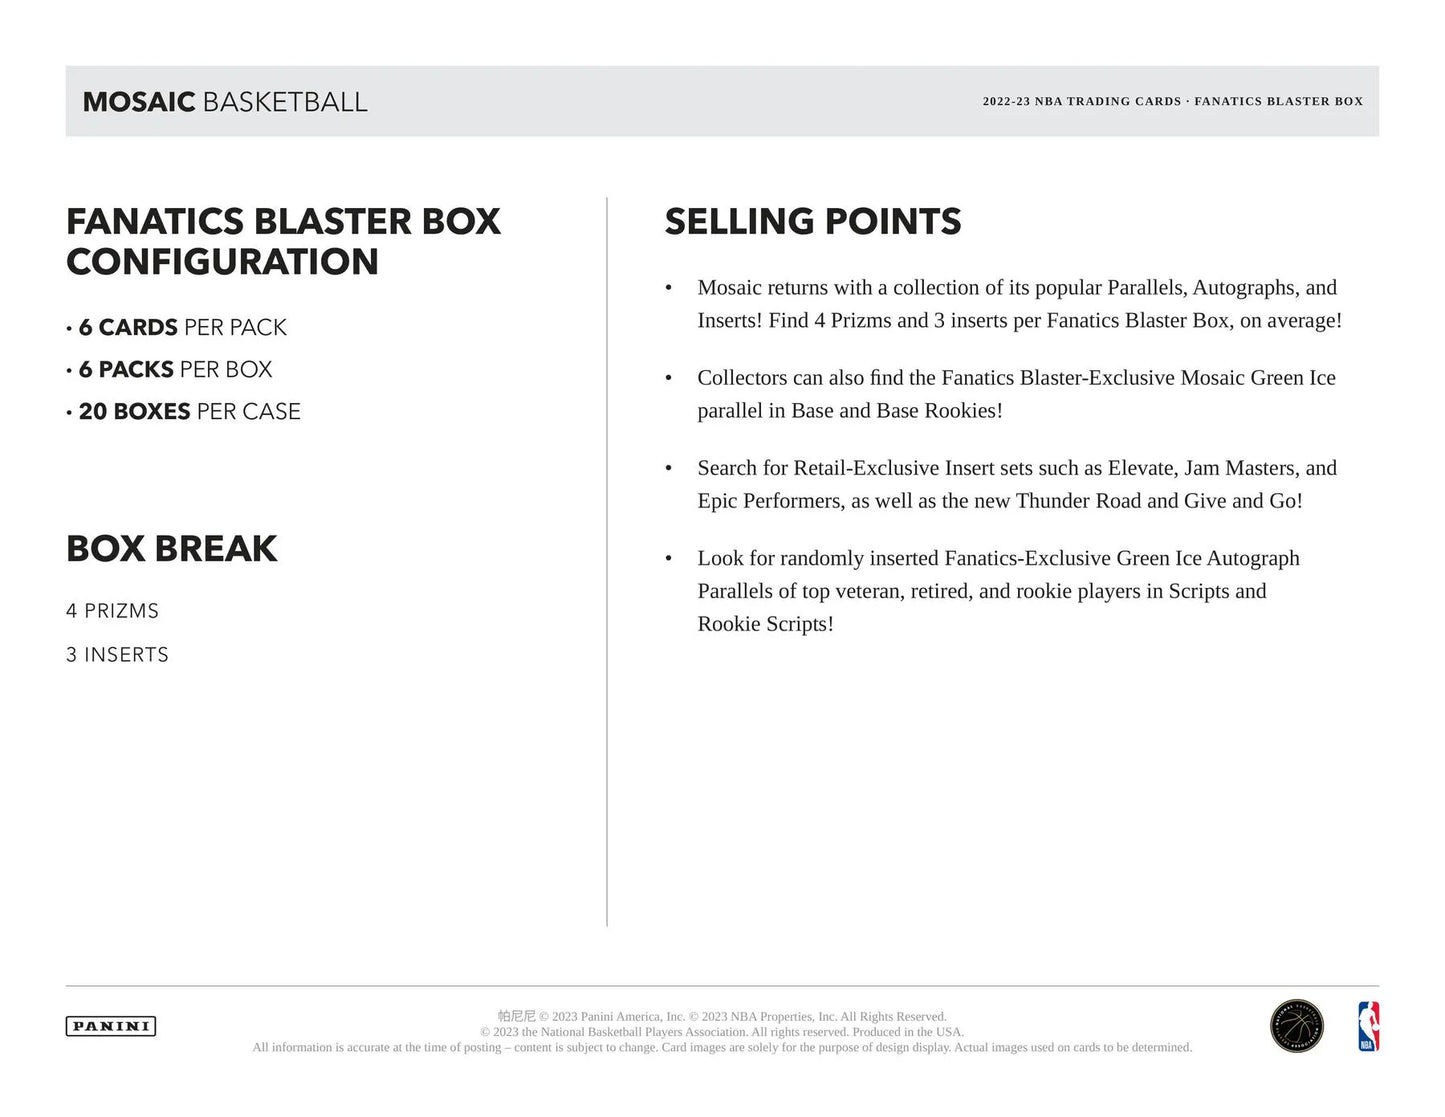 2022/23 Panini Mosaic Basketball 6-Pack Hobby Blaster 20-Box Case (Green Ice Prizm!)